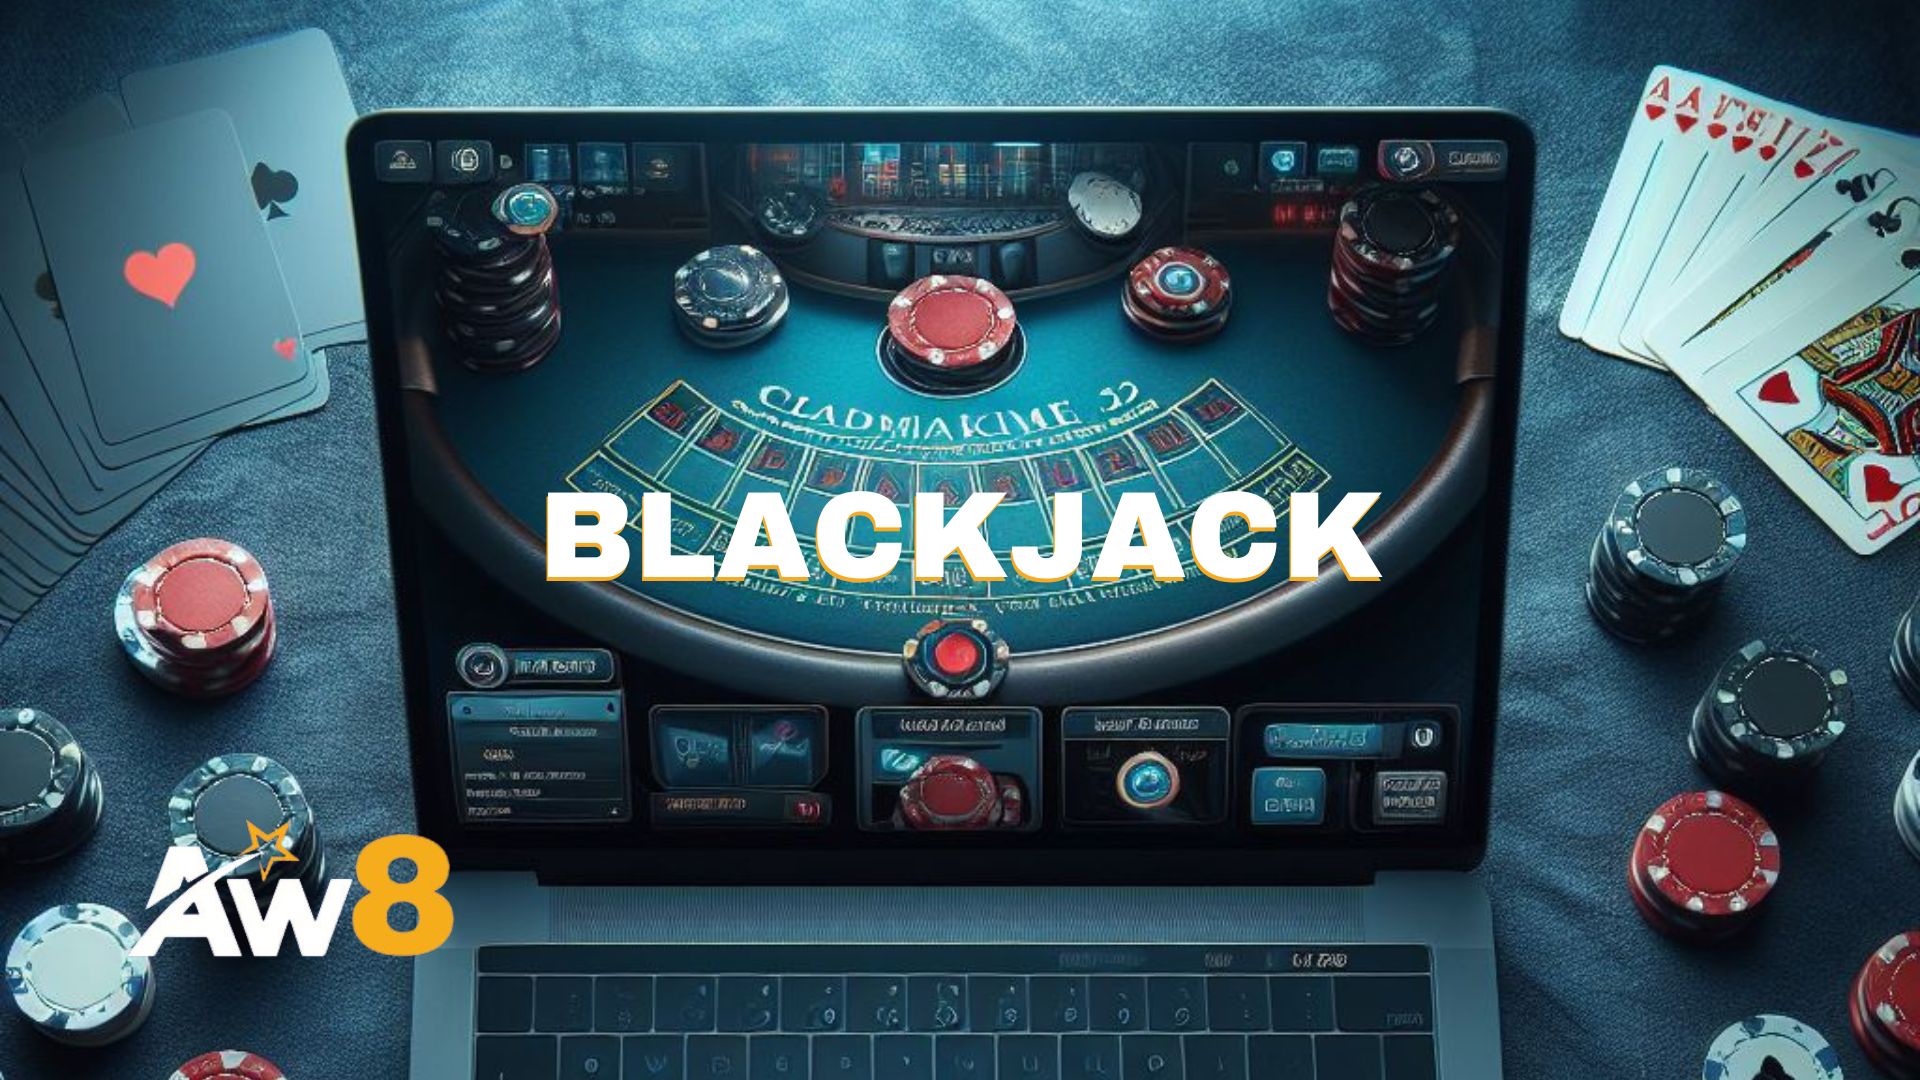 Aw8 Blackjack